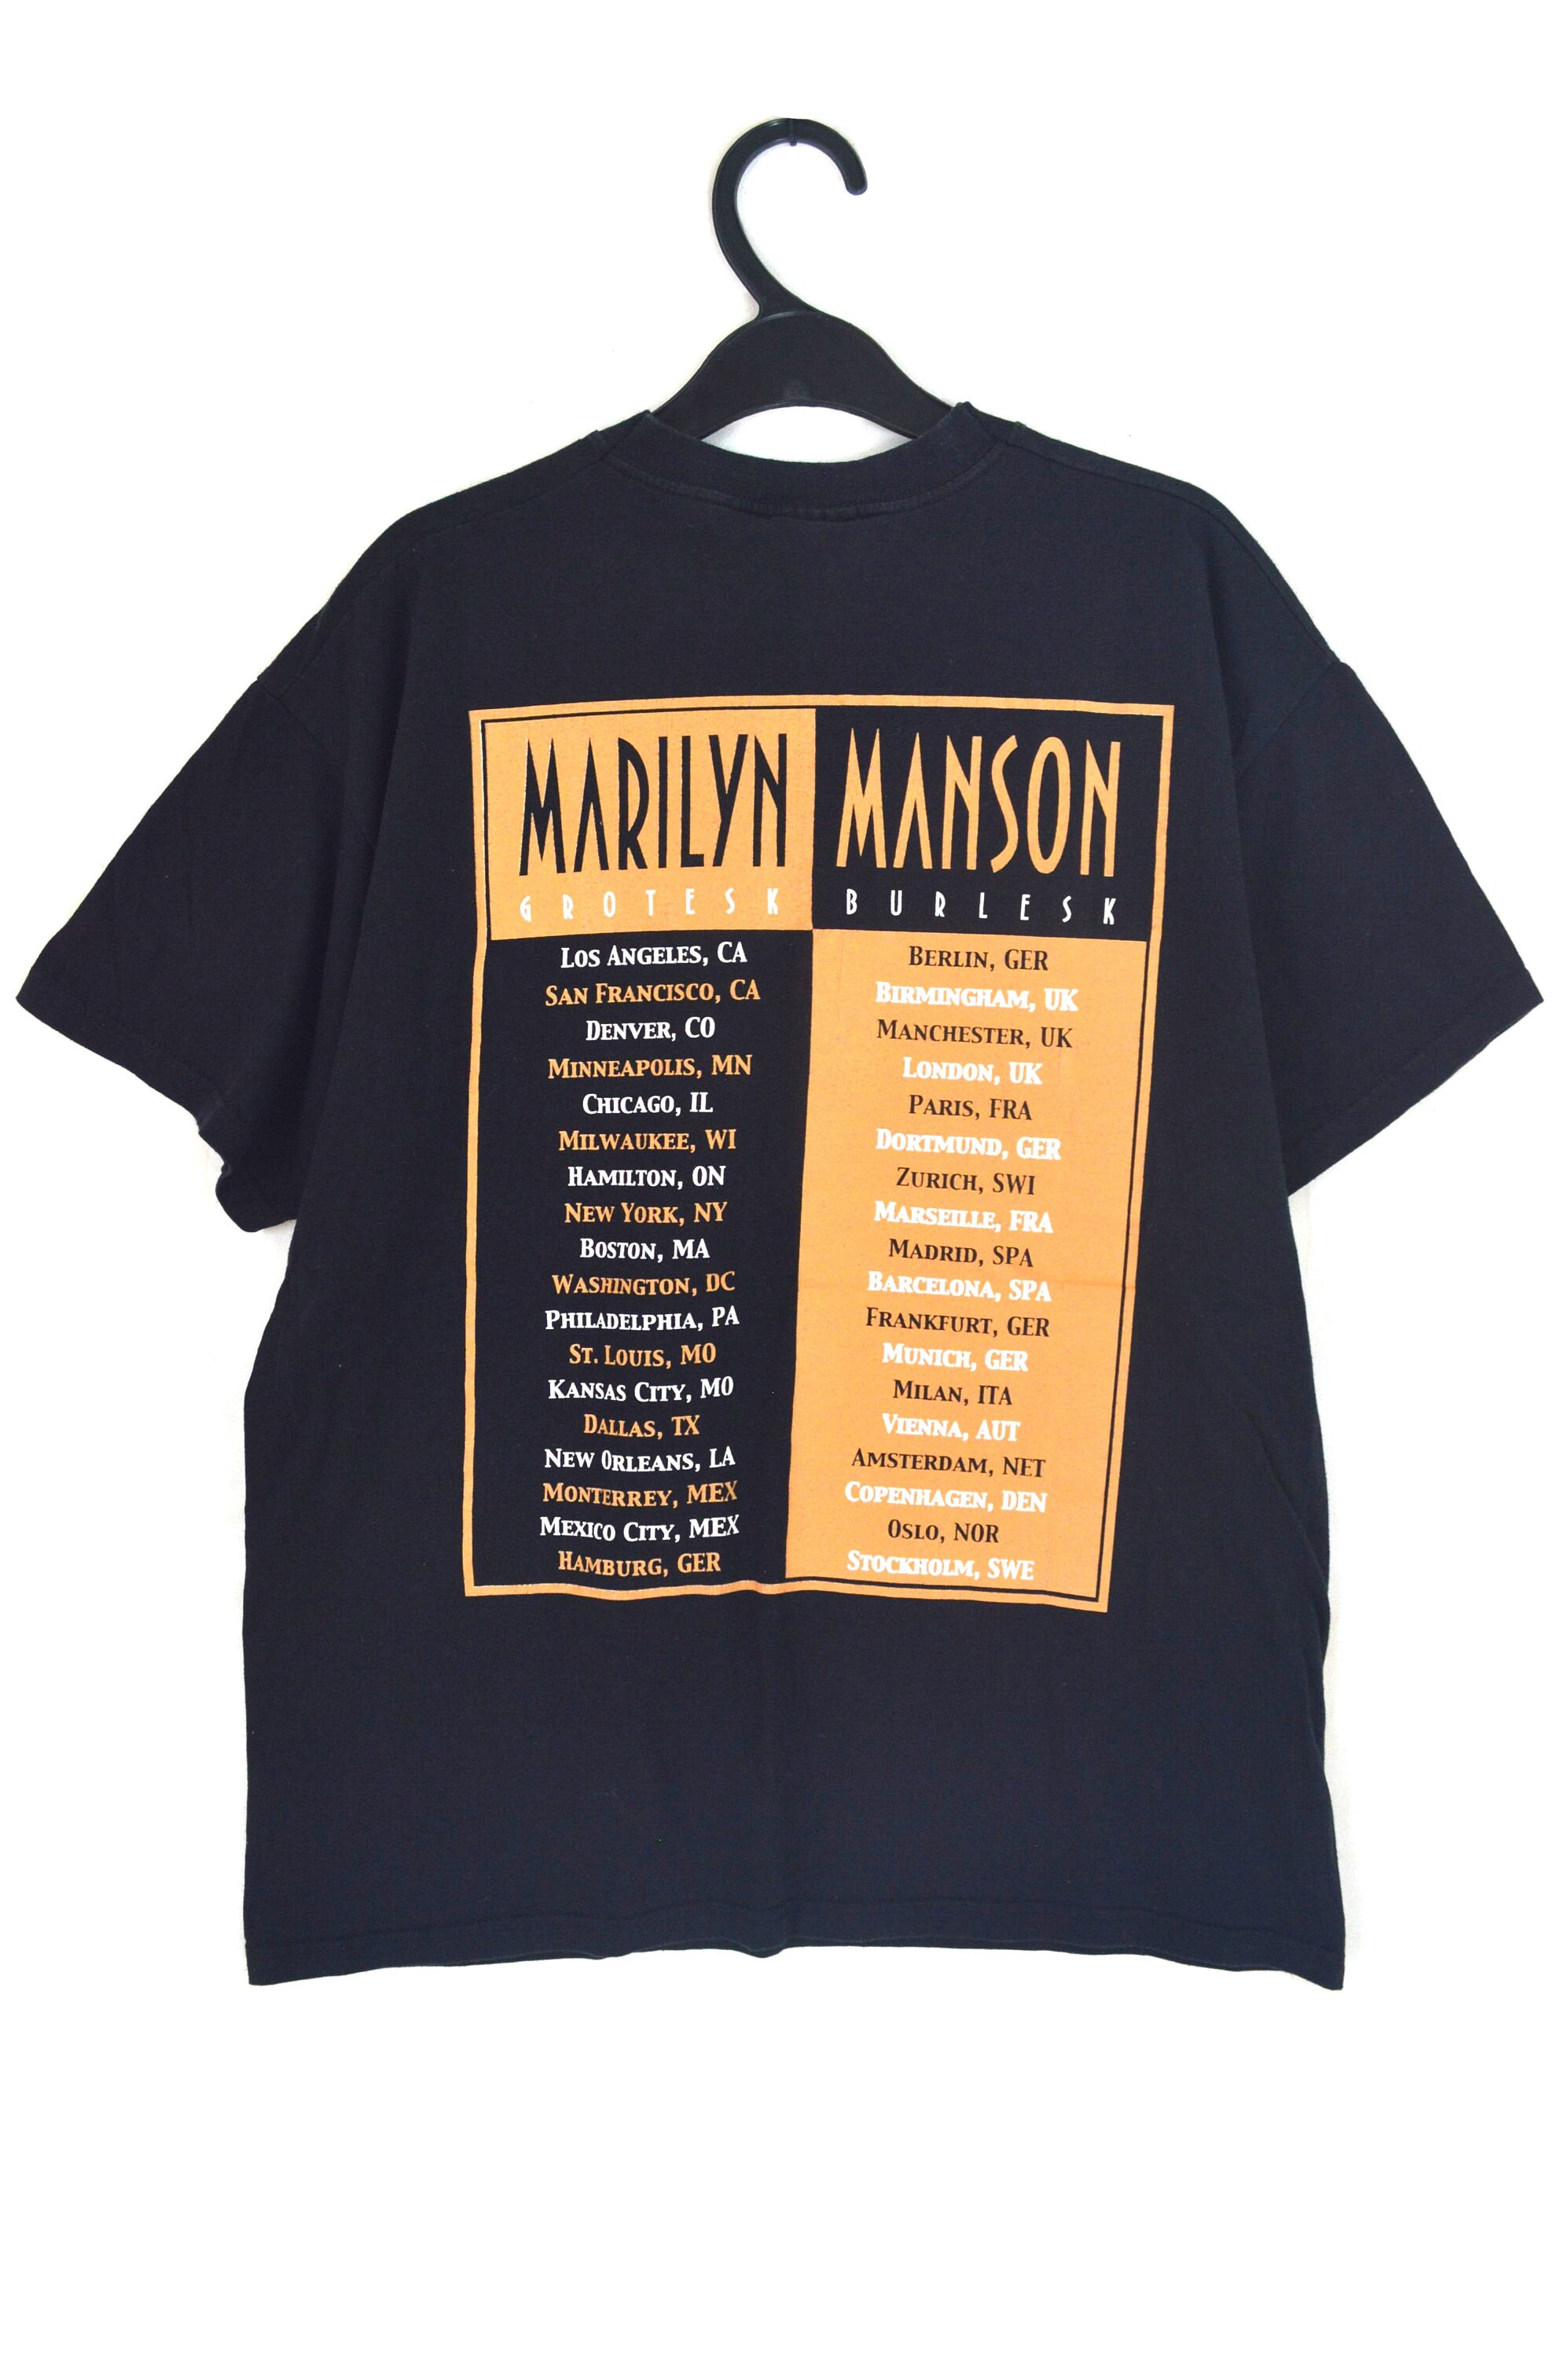 Vintage Marilyn Manson Grotesk Burlesk Tour T-shirt Black Size 